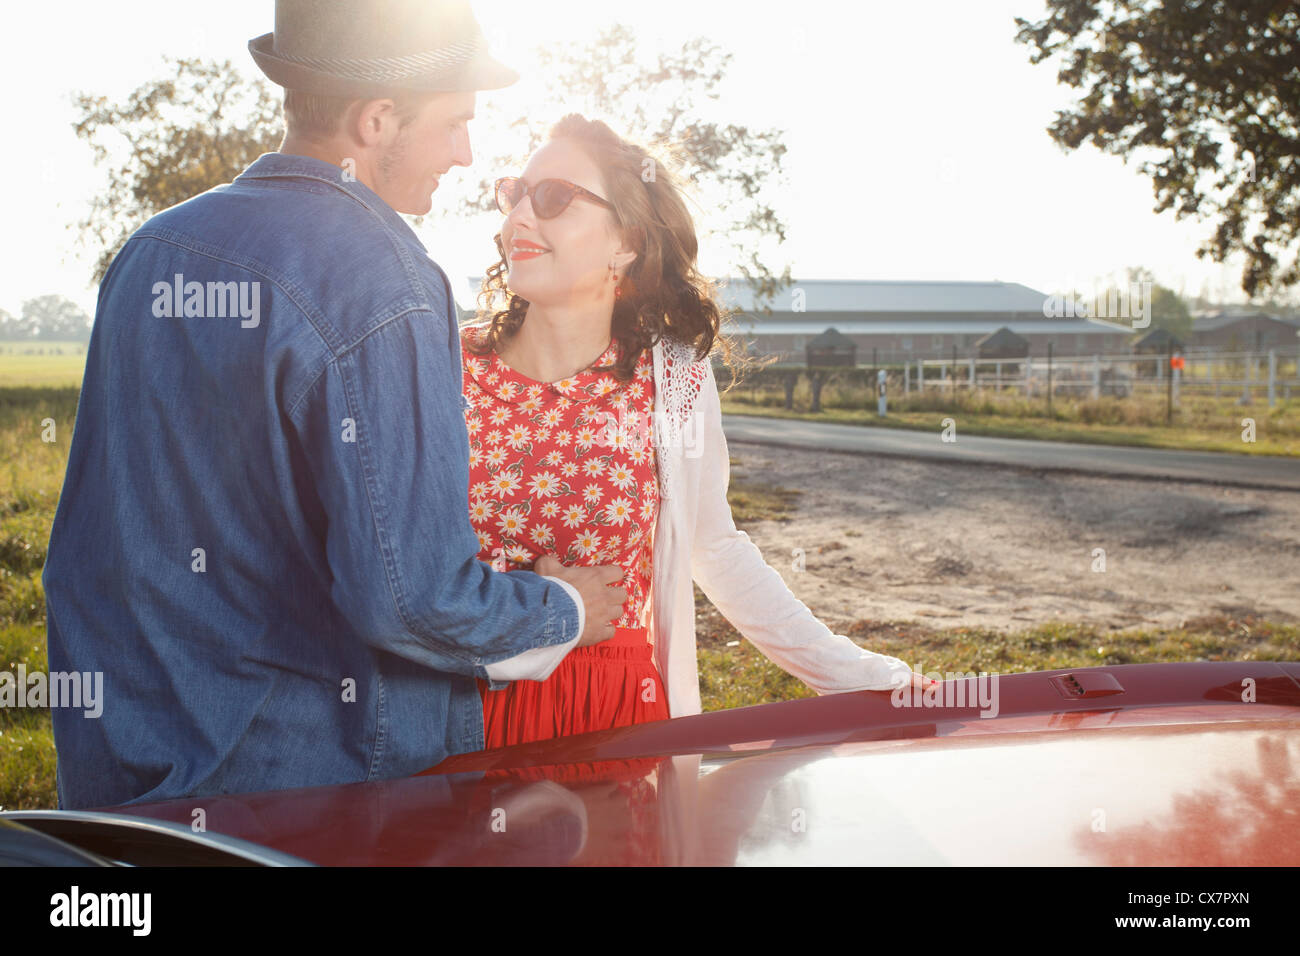 A flirtatious rockabilly couple standing next to a vintage car Stock Photo